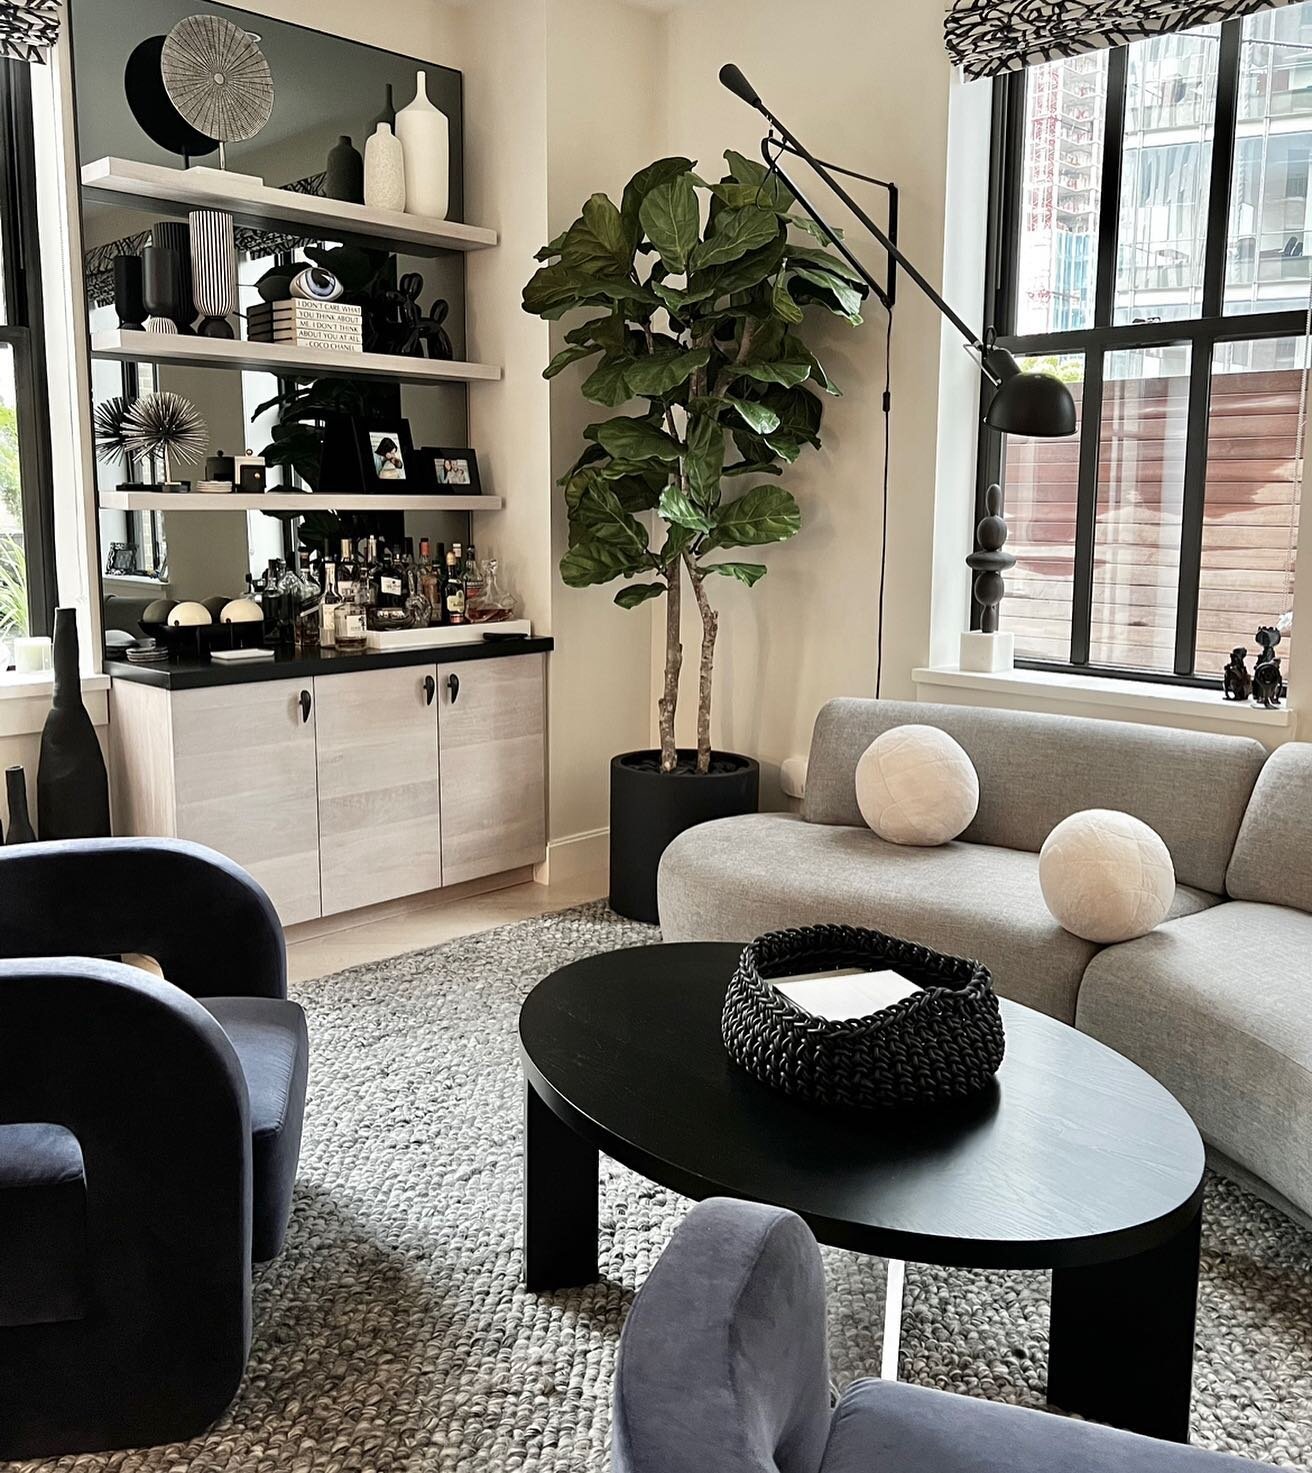 Can&rsquo;t wait to finally shoot this beauty 

#tribeca #livingroom #loftliving #interiordesign #designer #texture #familyhome #livingwithkids #amykalikowdesign